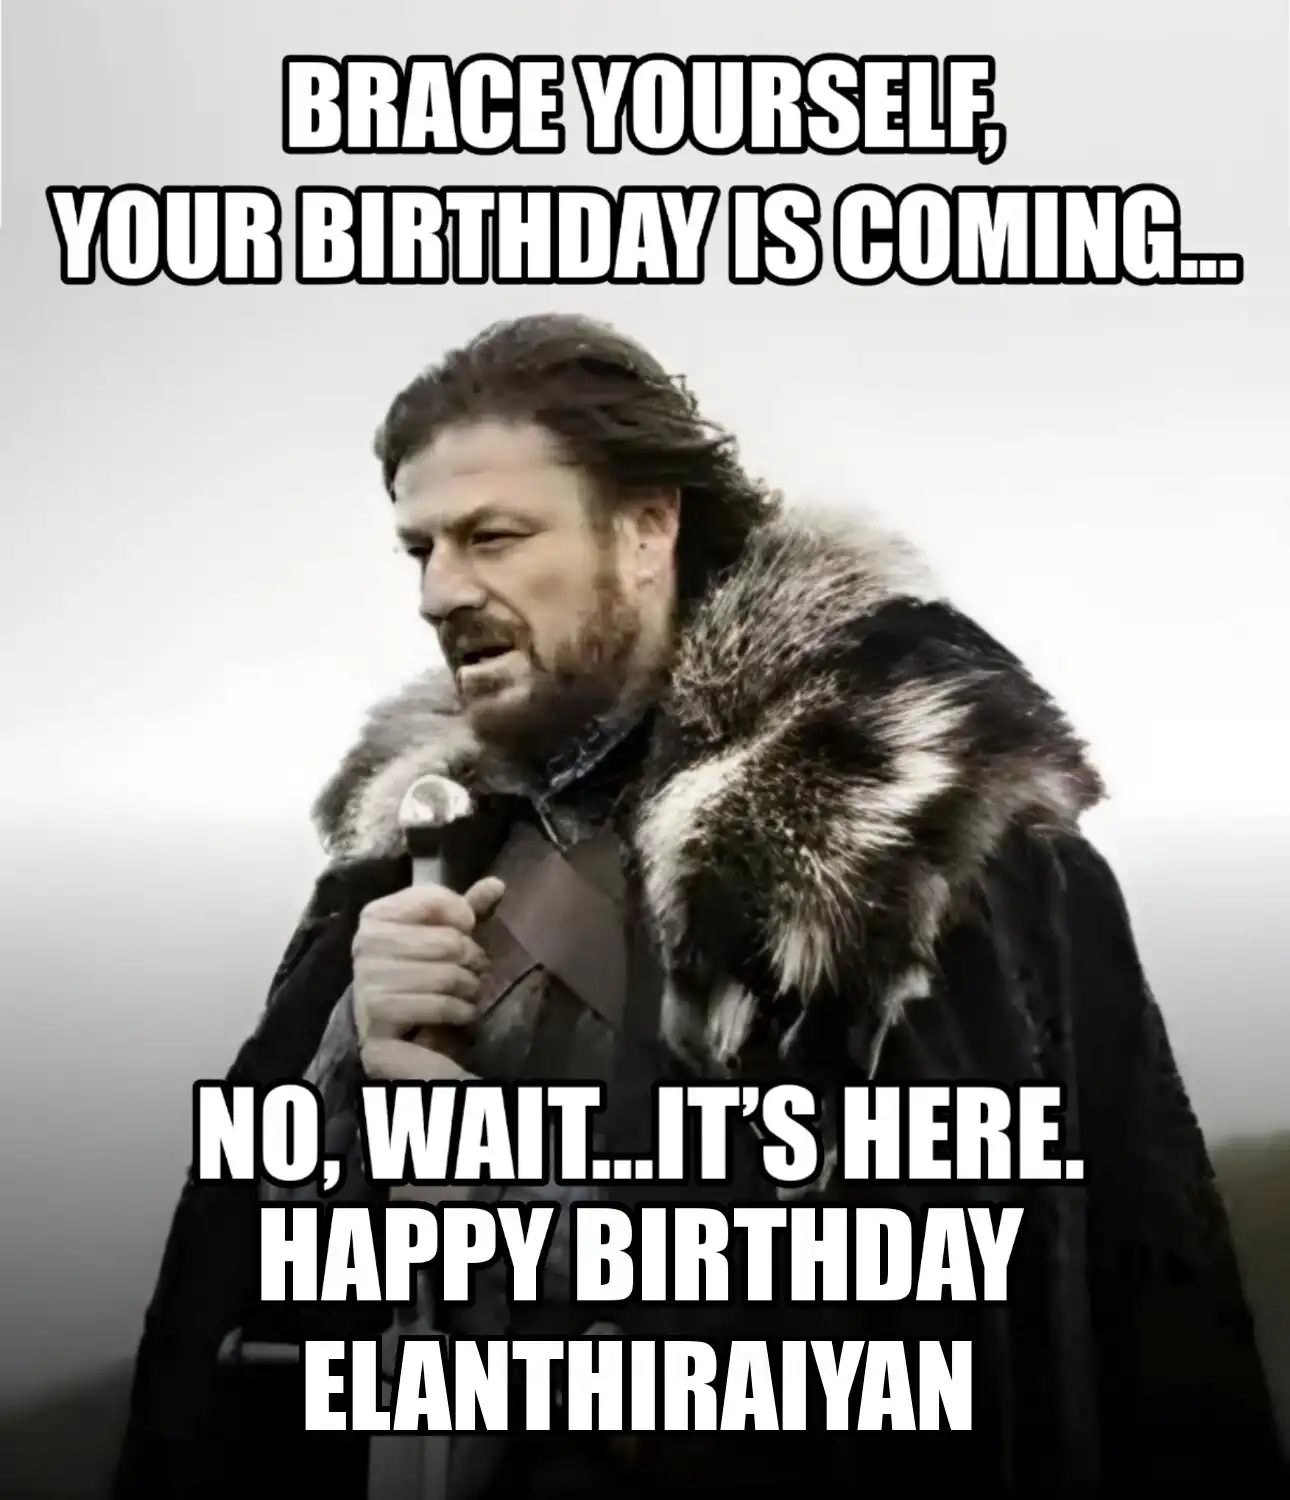 Happy Birthday Elanthiraiyan Brace Yourself Your Birthday Is Coming Meme